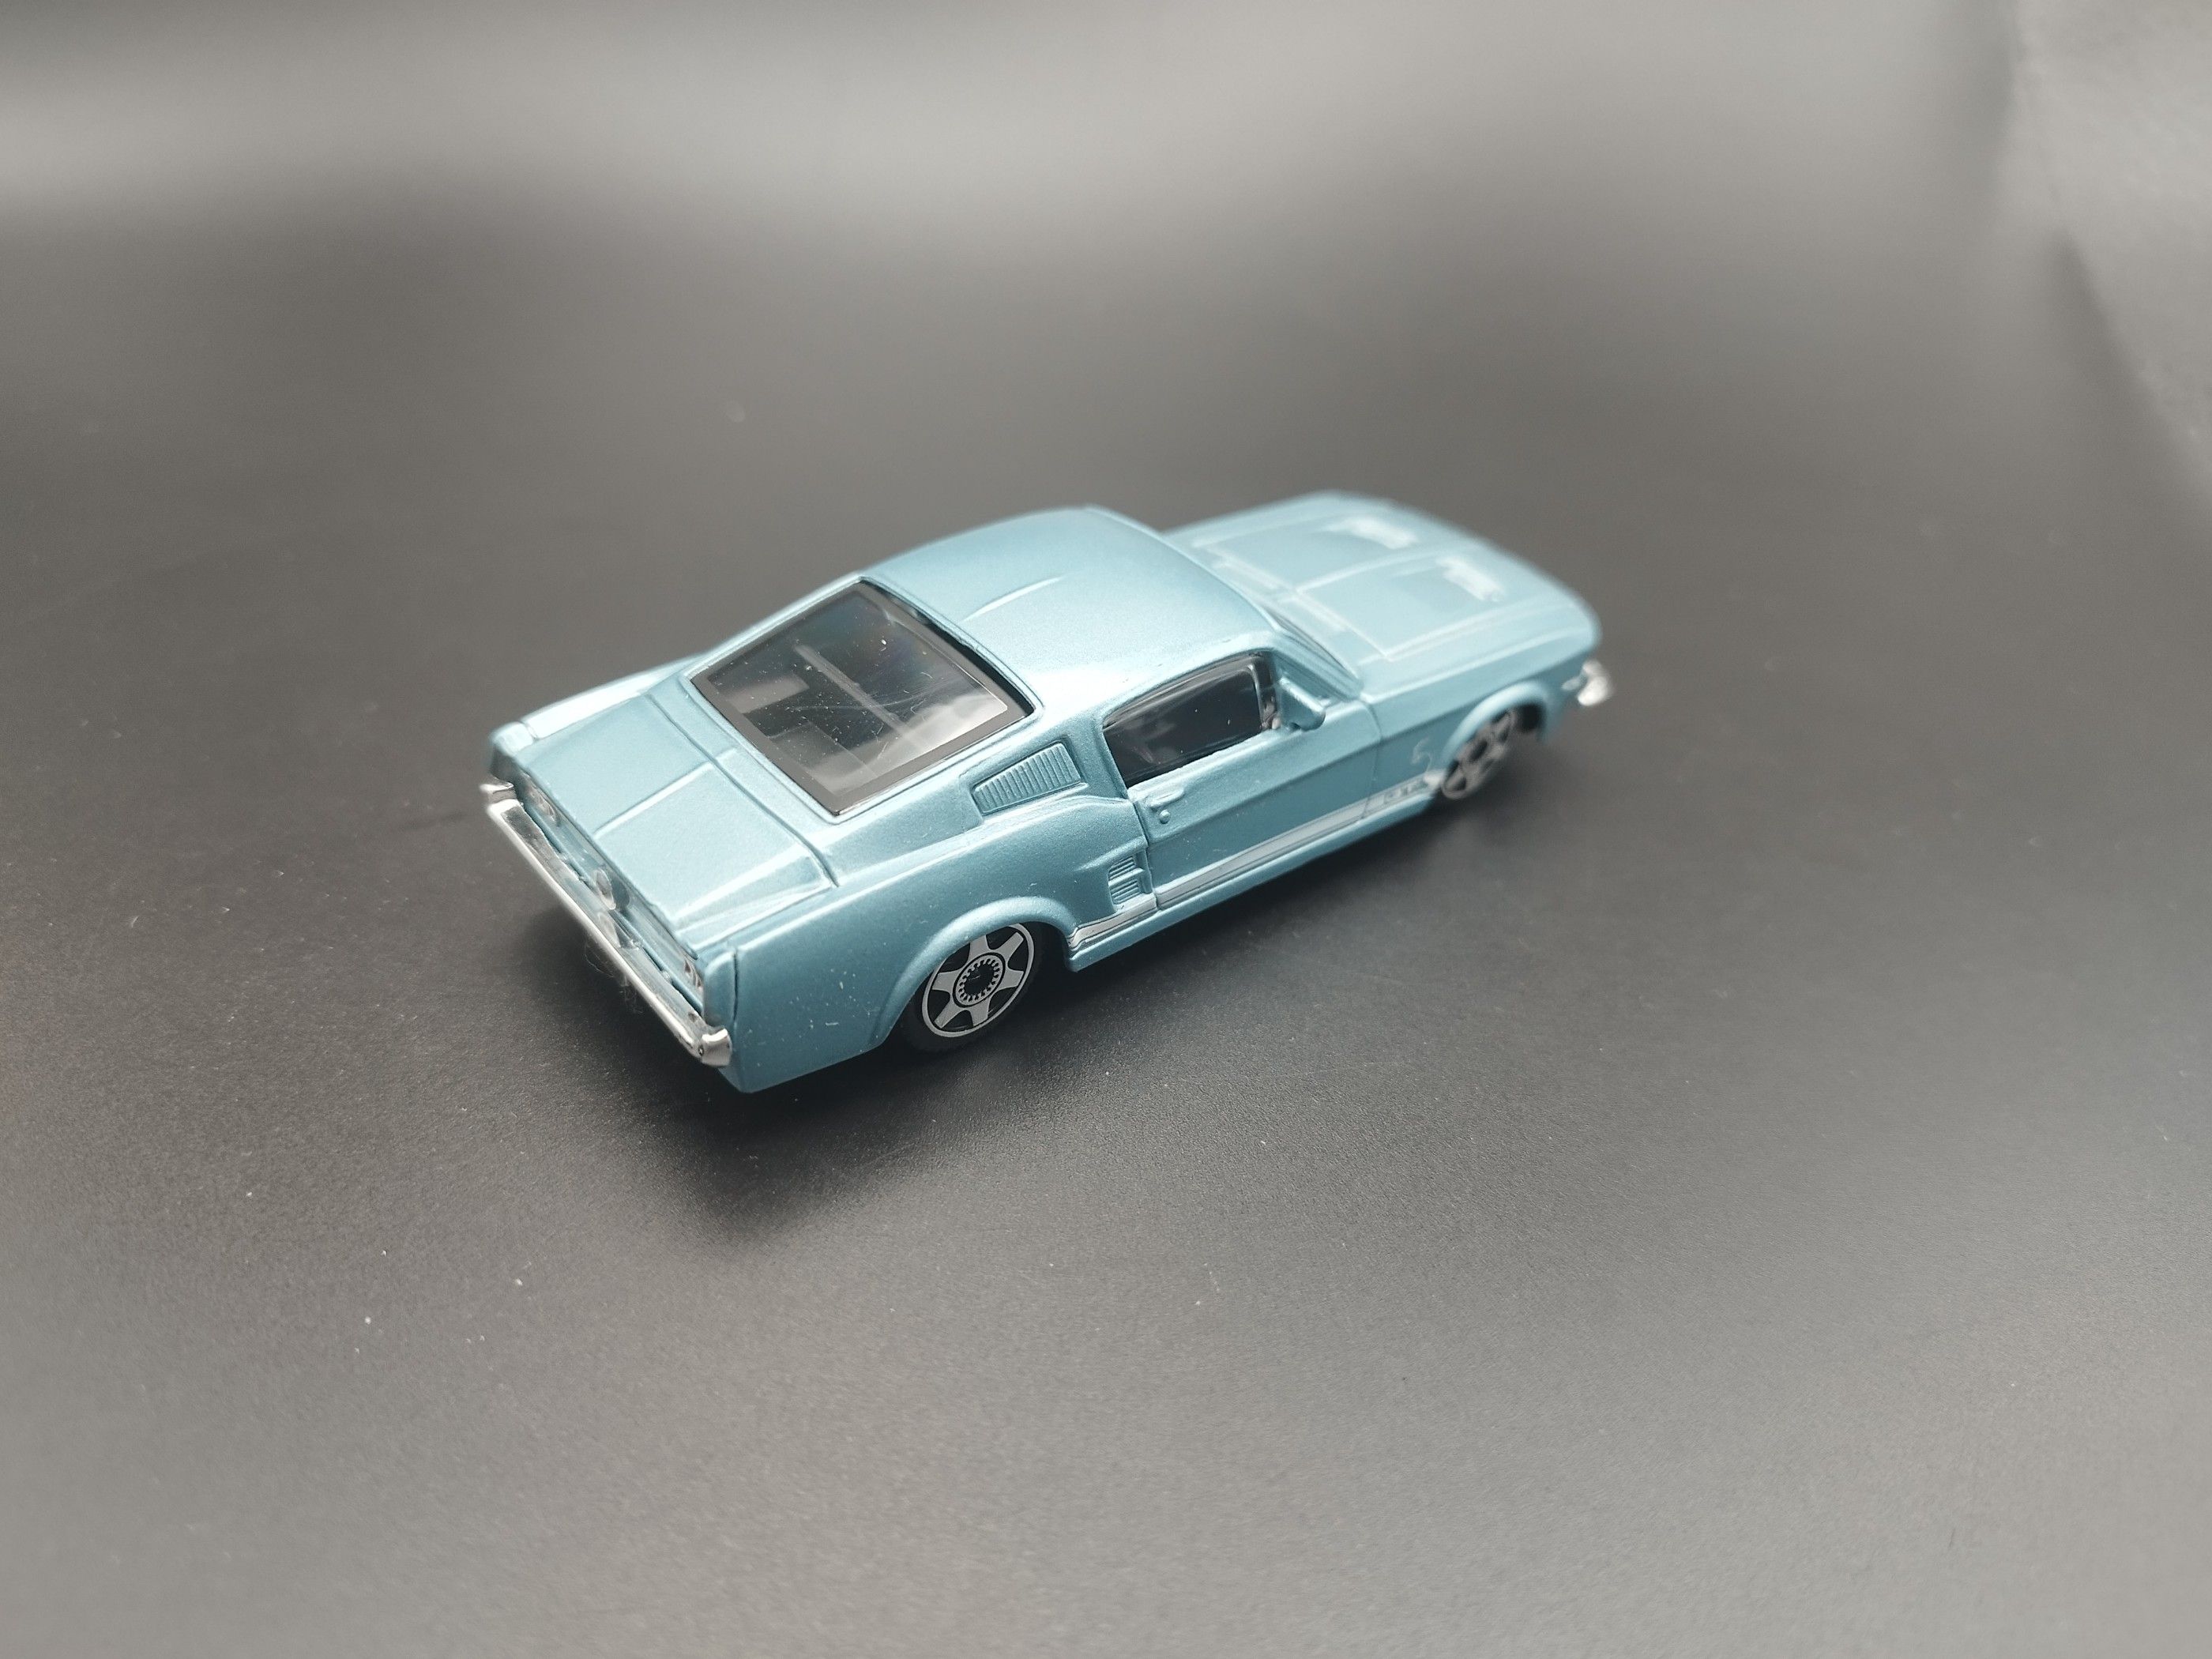 1:43 Bburago Ford Mustang G.T. Model